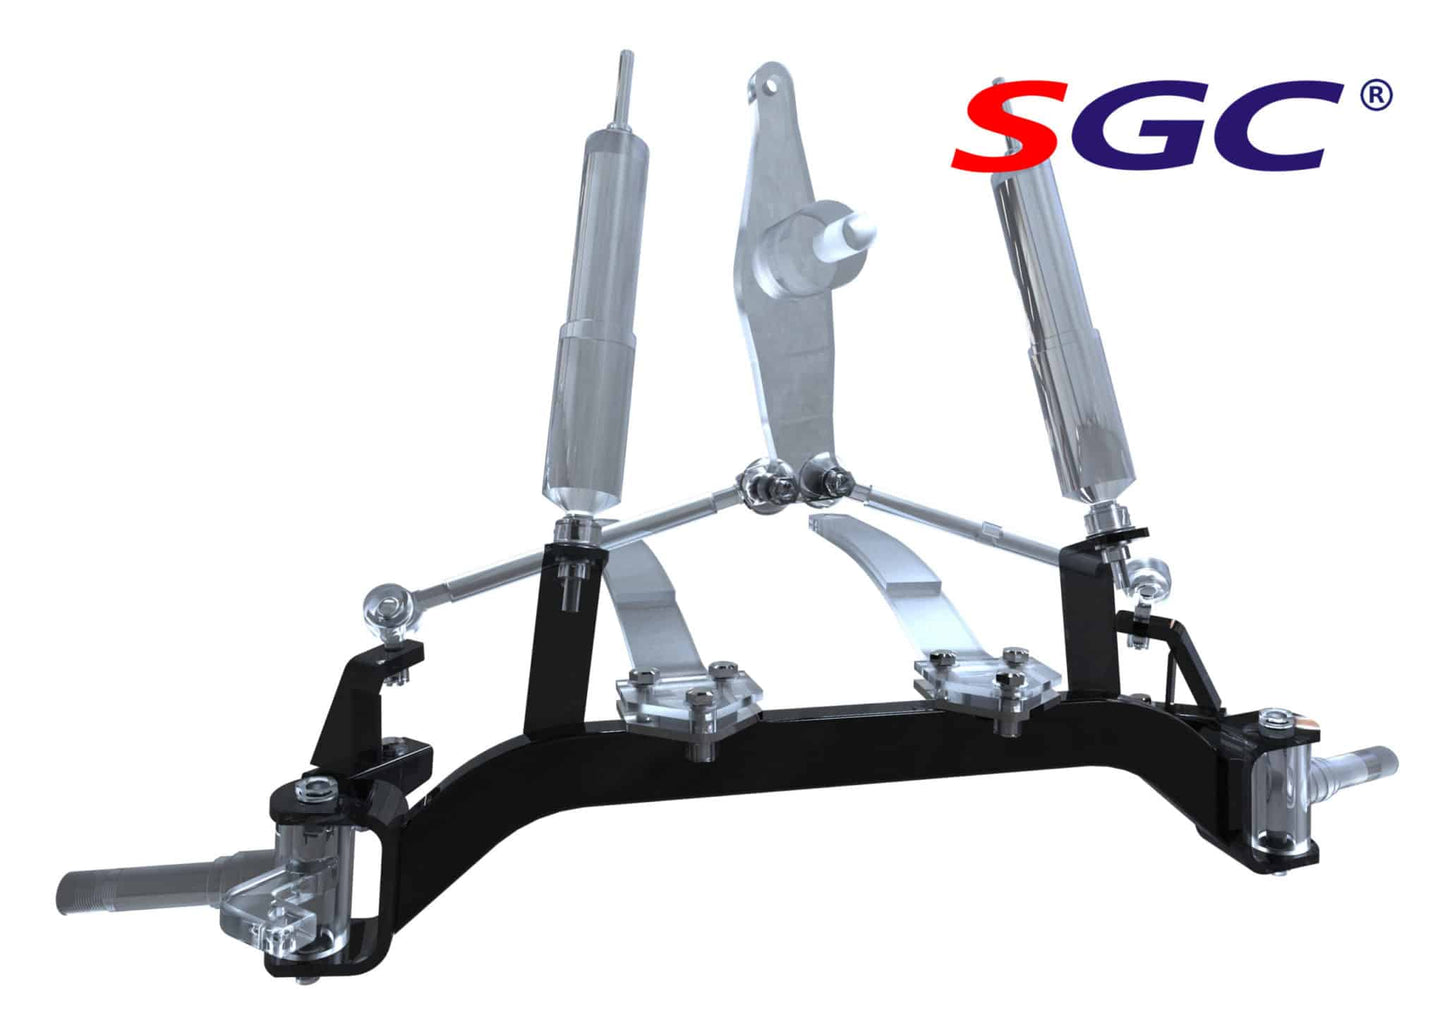 LKTX03 – SGC Lift kit – 4″ Drop Axle kit for EZGO TXT (1994-2001.5) Gas